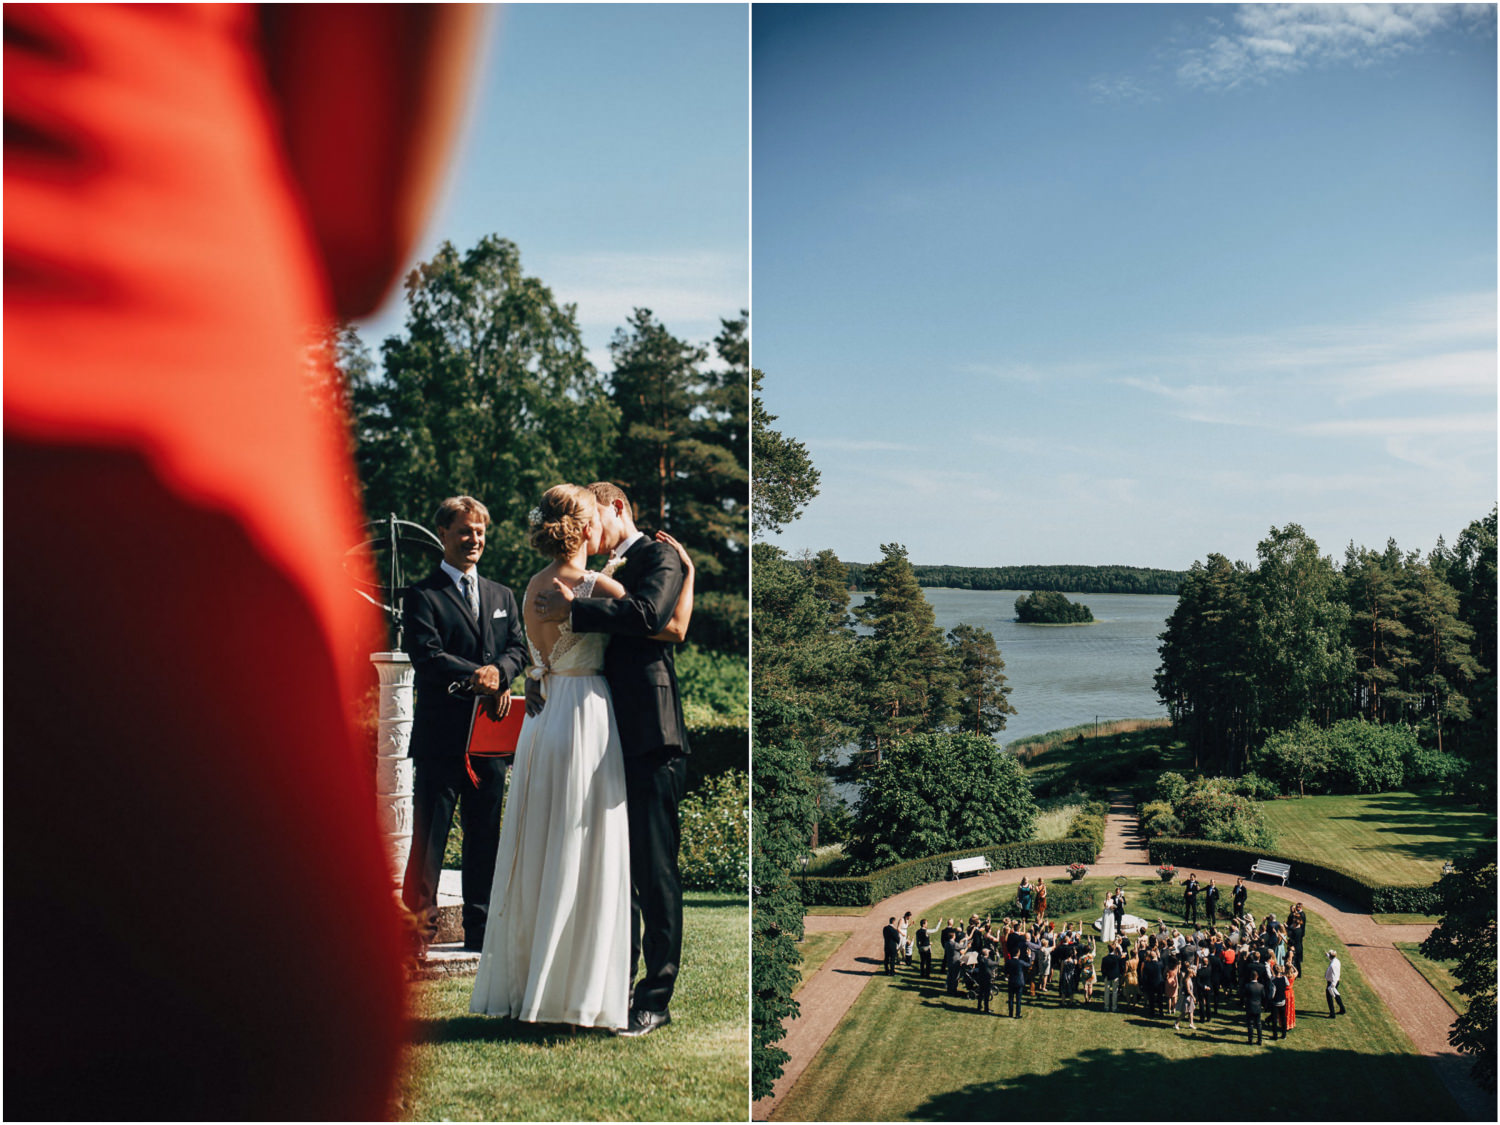 jere-satamo_valokuvaaja-turku_destination-wedding-photographer-finland-033.jpg